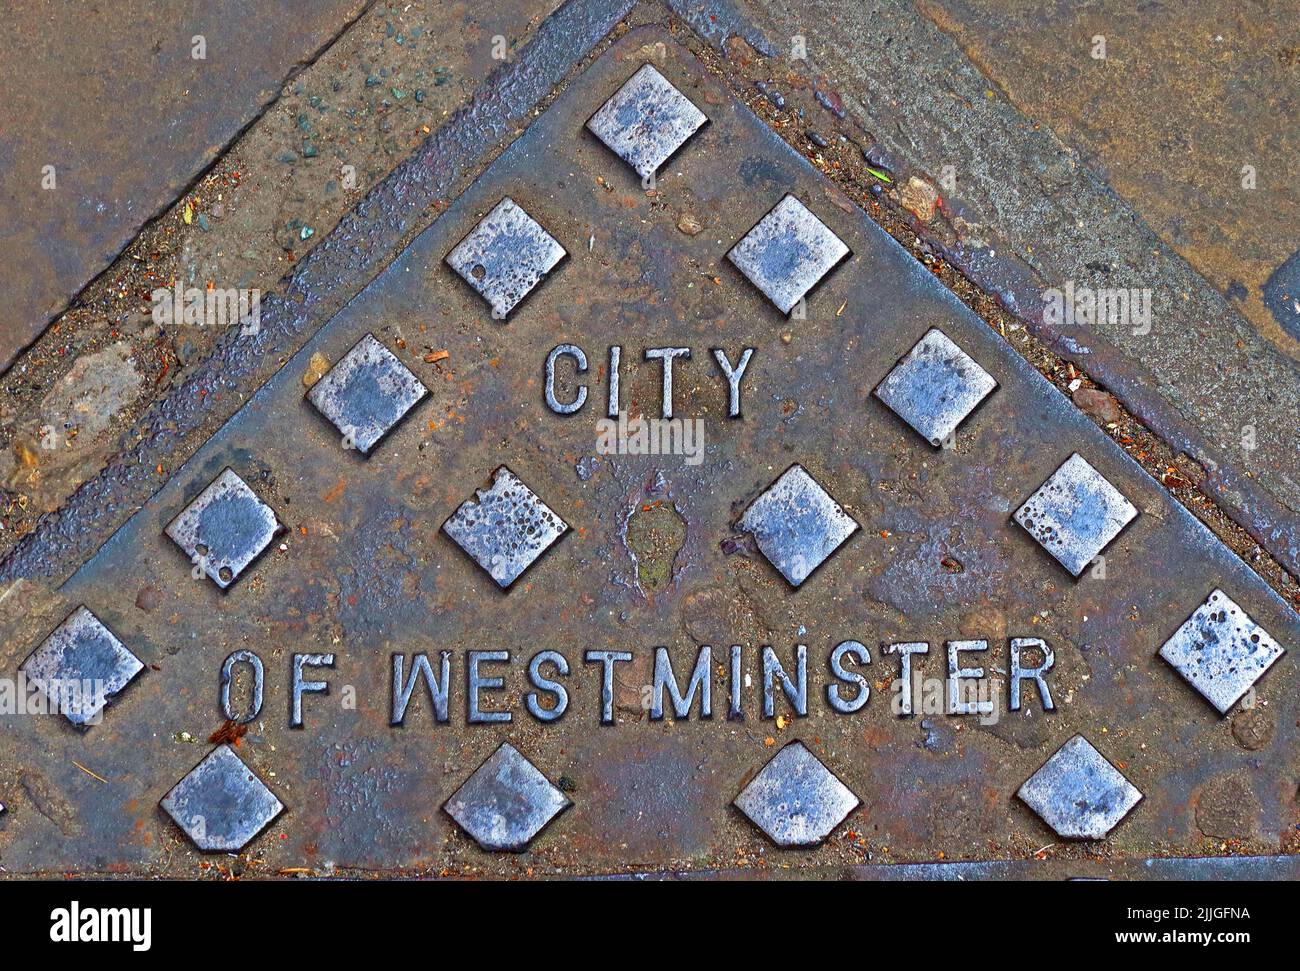 Geprägtes Gitter City of Westminster, Central London, England, UK, SW1P 2hr Stockfoto